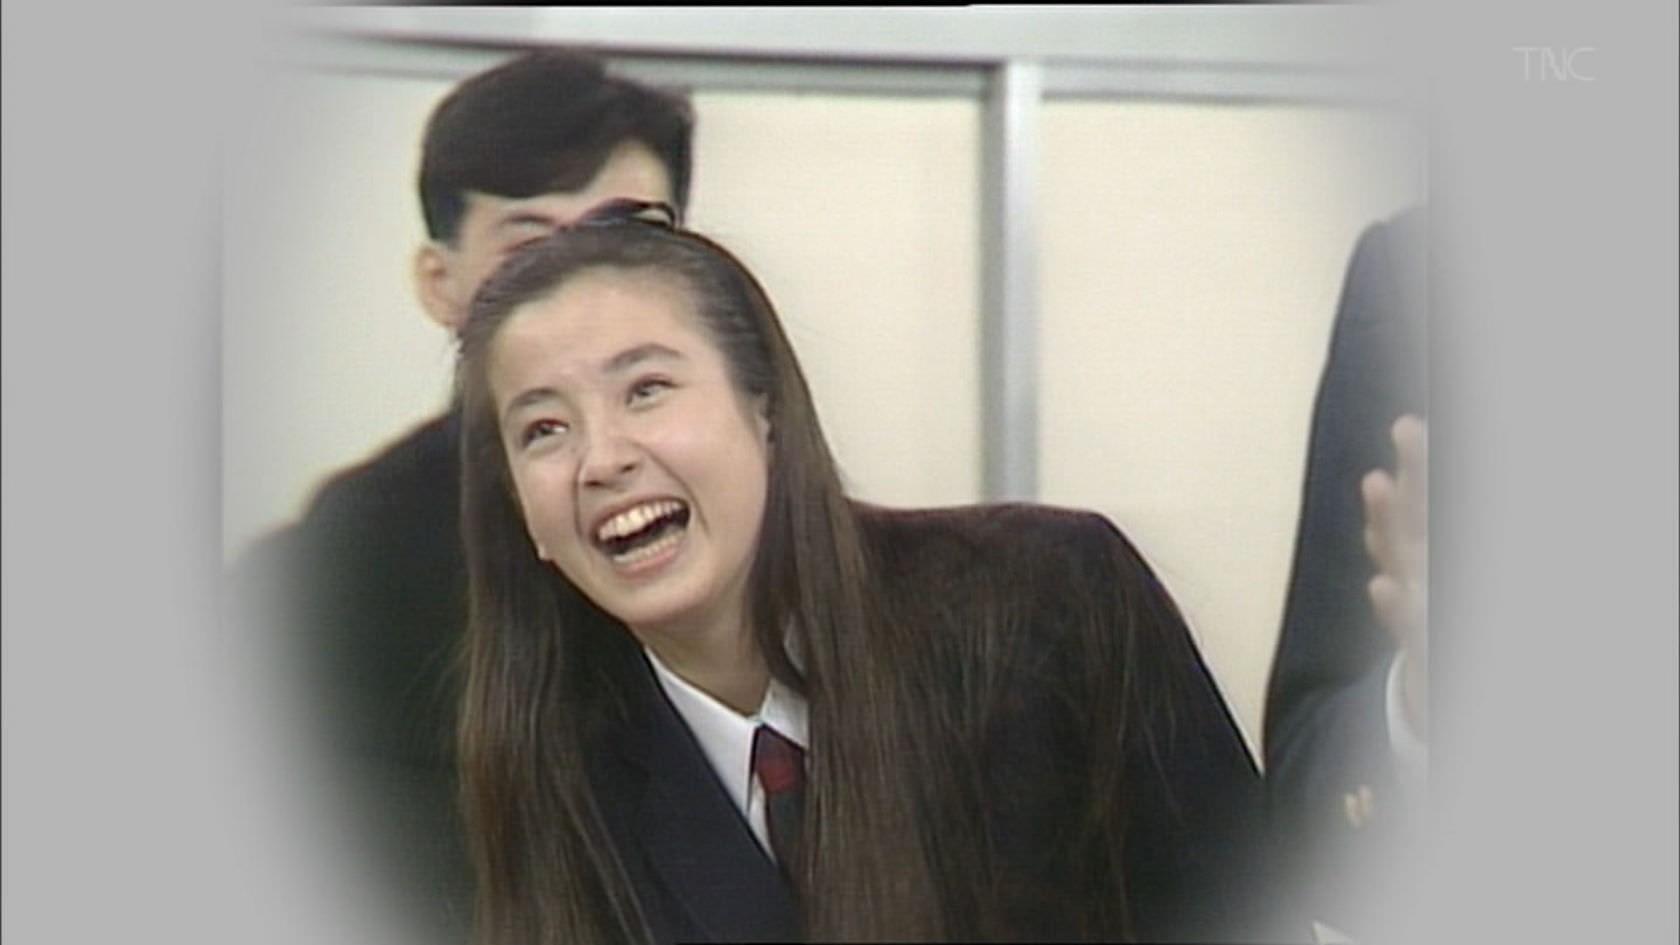 [Image] Rie Miyazawa's young face is god wwwwwww